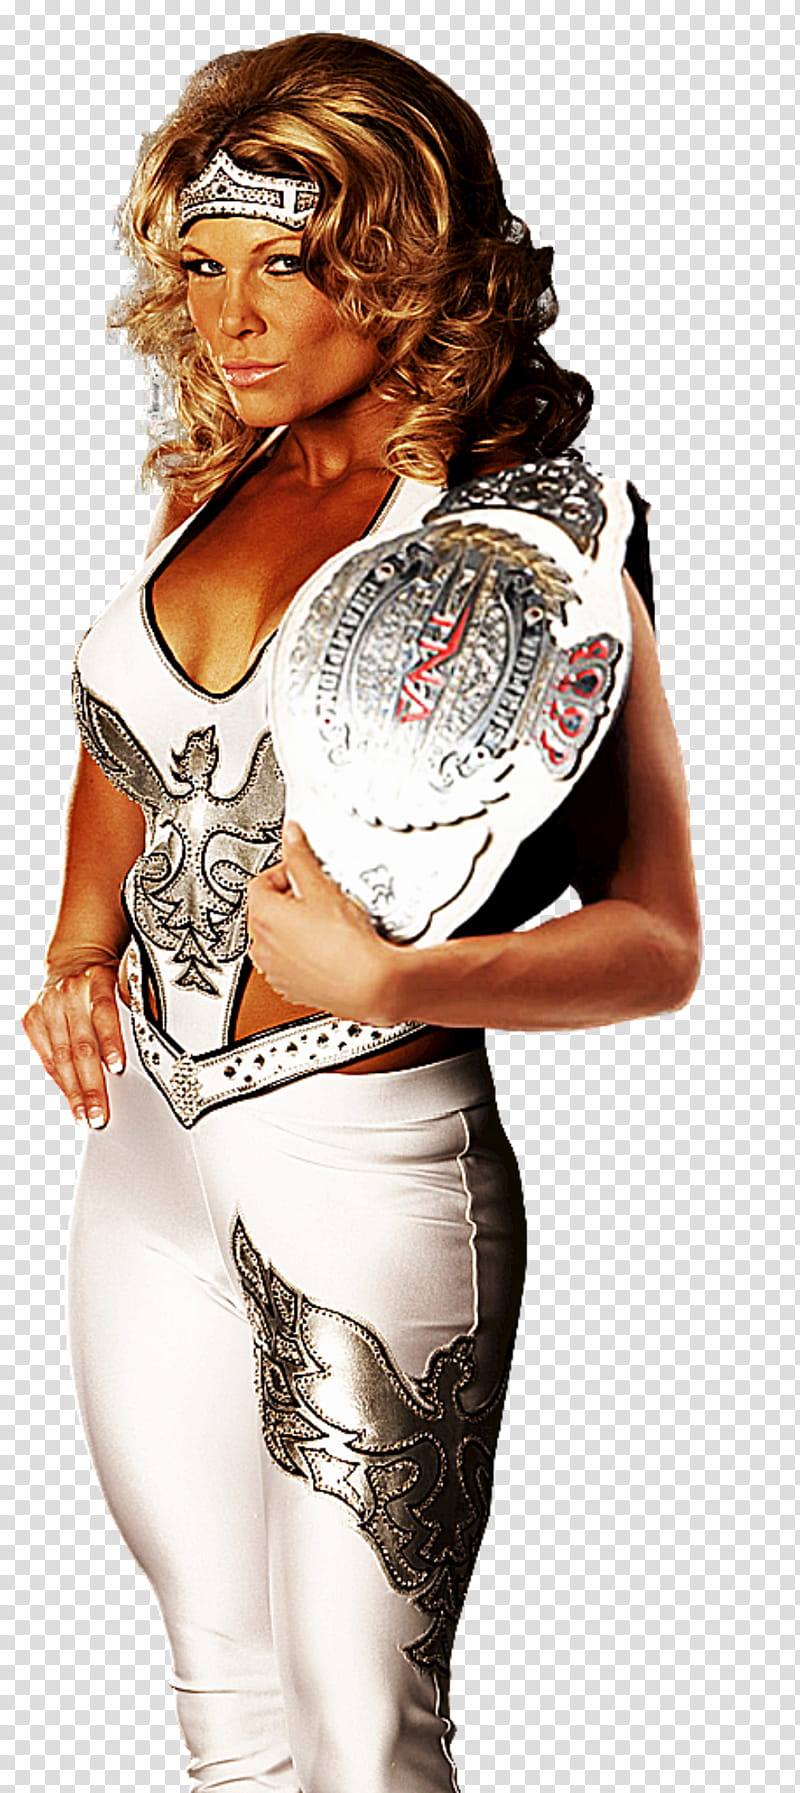 Beth Phoenix TNA Knockouts Champion transparent background PNG clipart